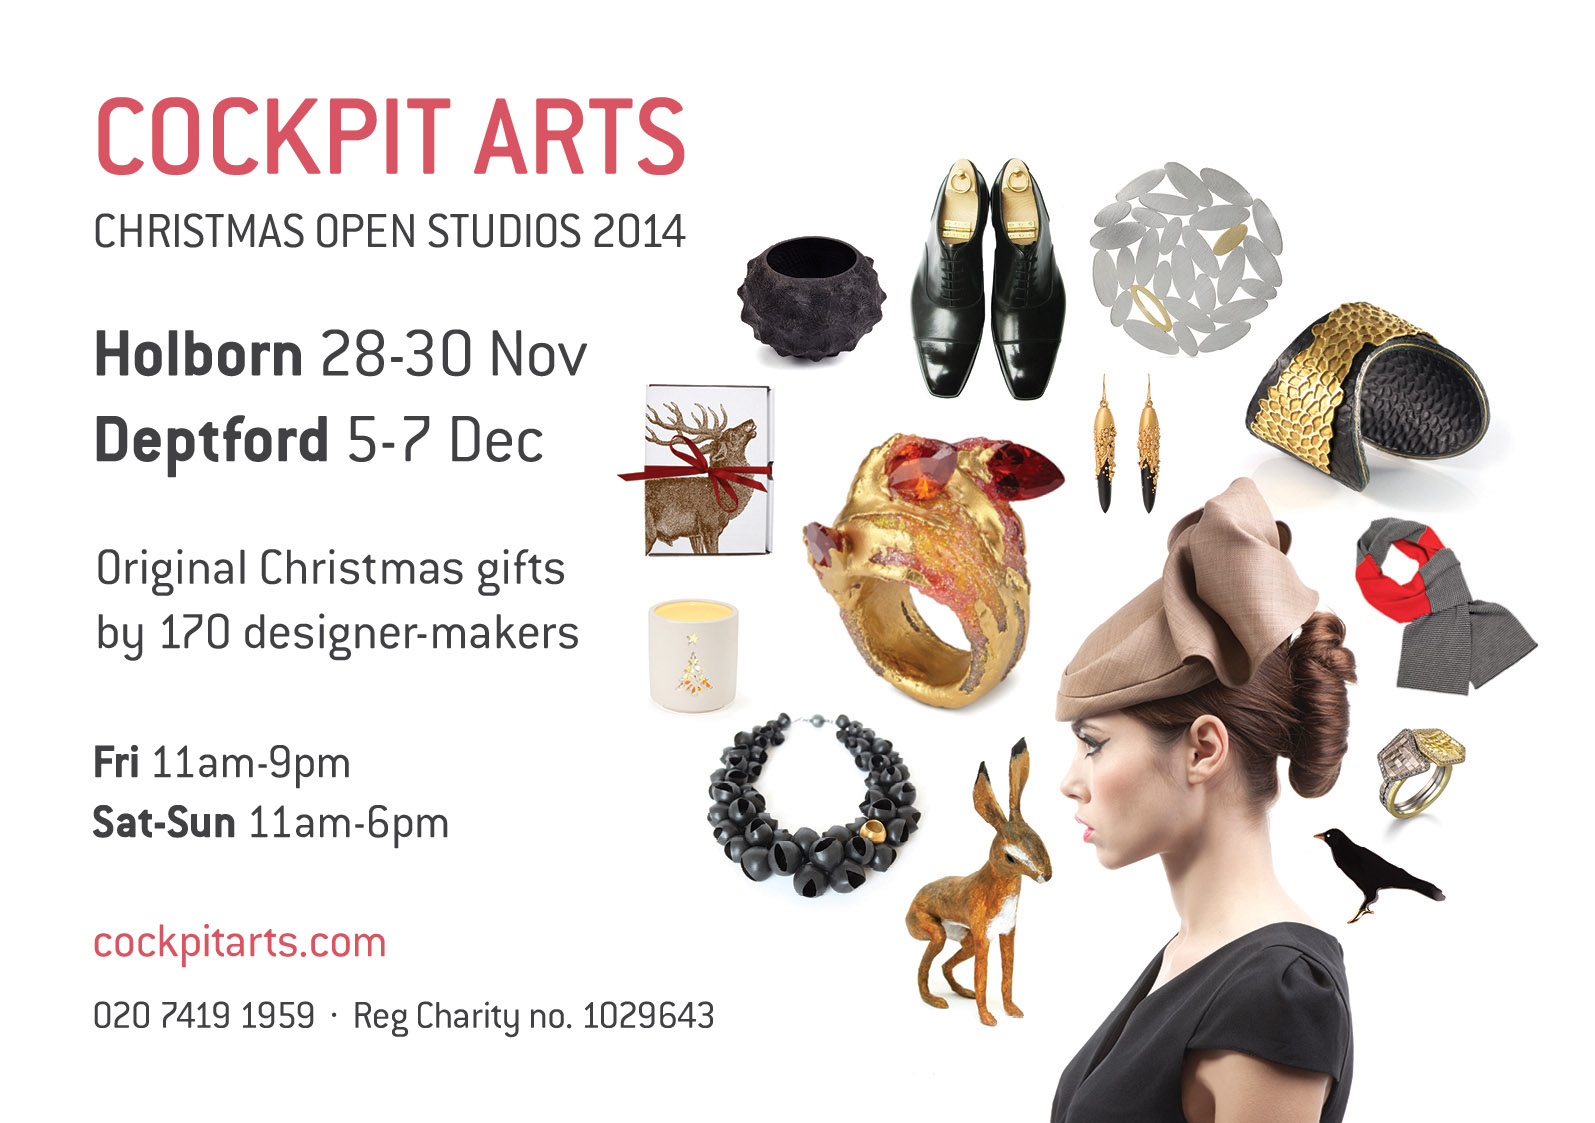 Cockpit Arts Christmas Open Studios invitation 2014